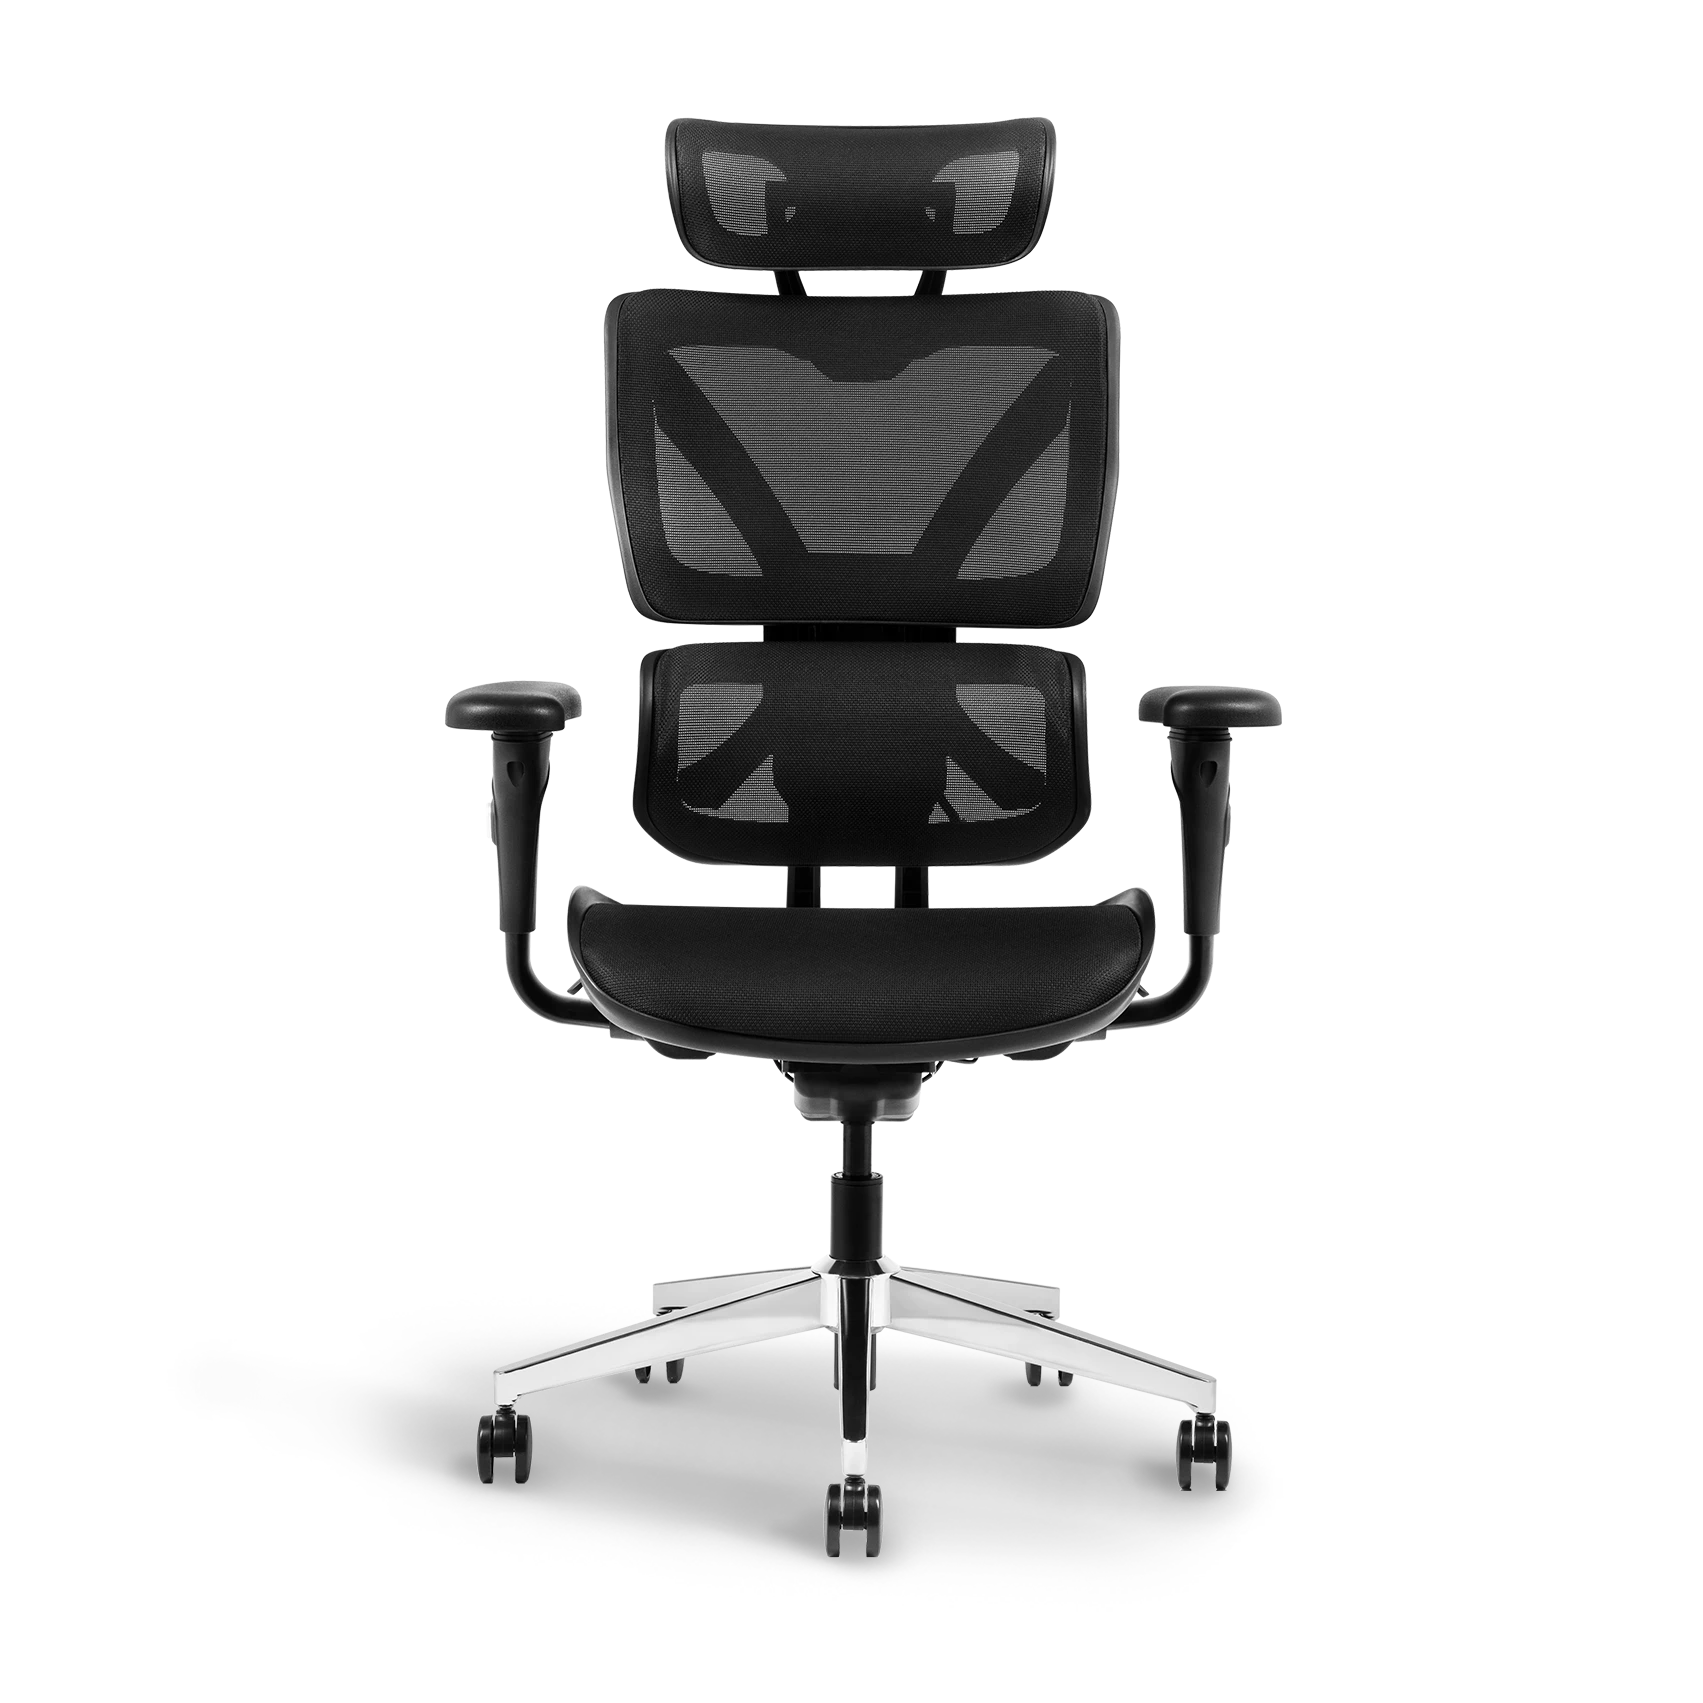 Ayla Ergonomic Chair Black, emphasizing the modern design and ergonomic shape for optimal office comfort.